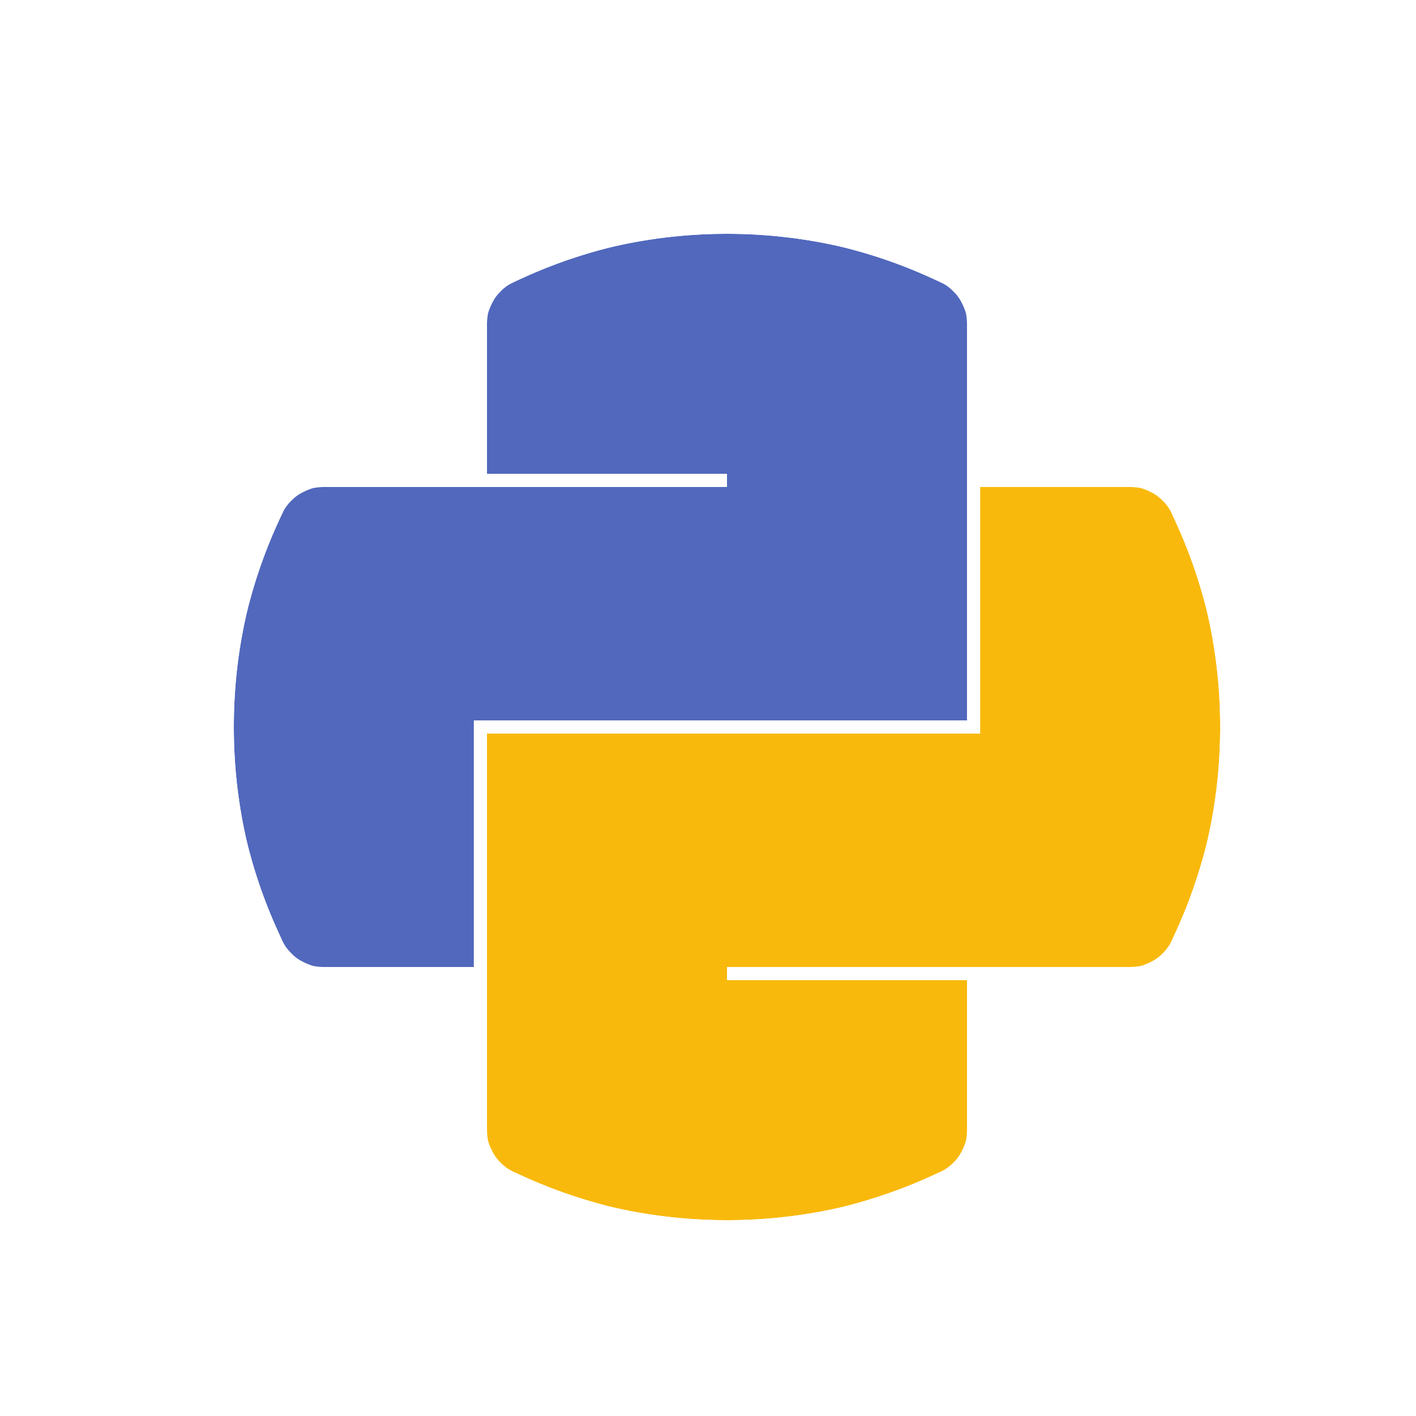 Software Language Python Logo PNG Picture Transparent pngteam.com